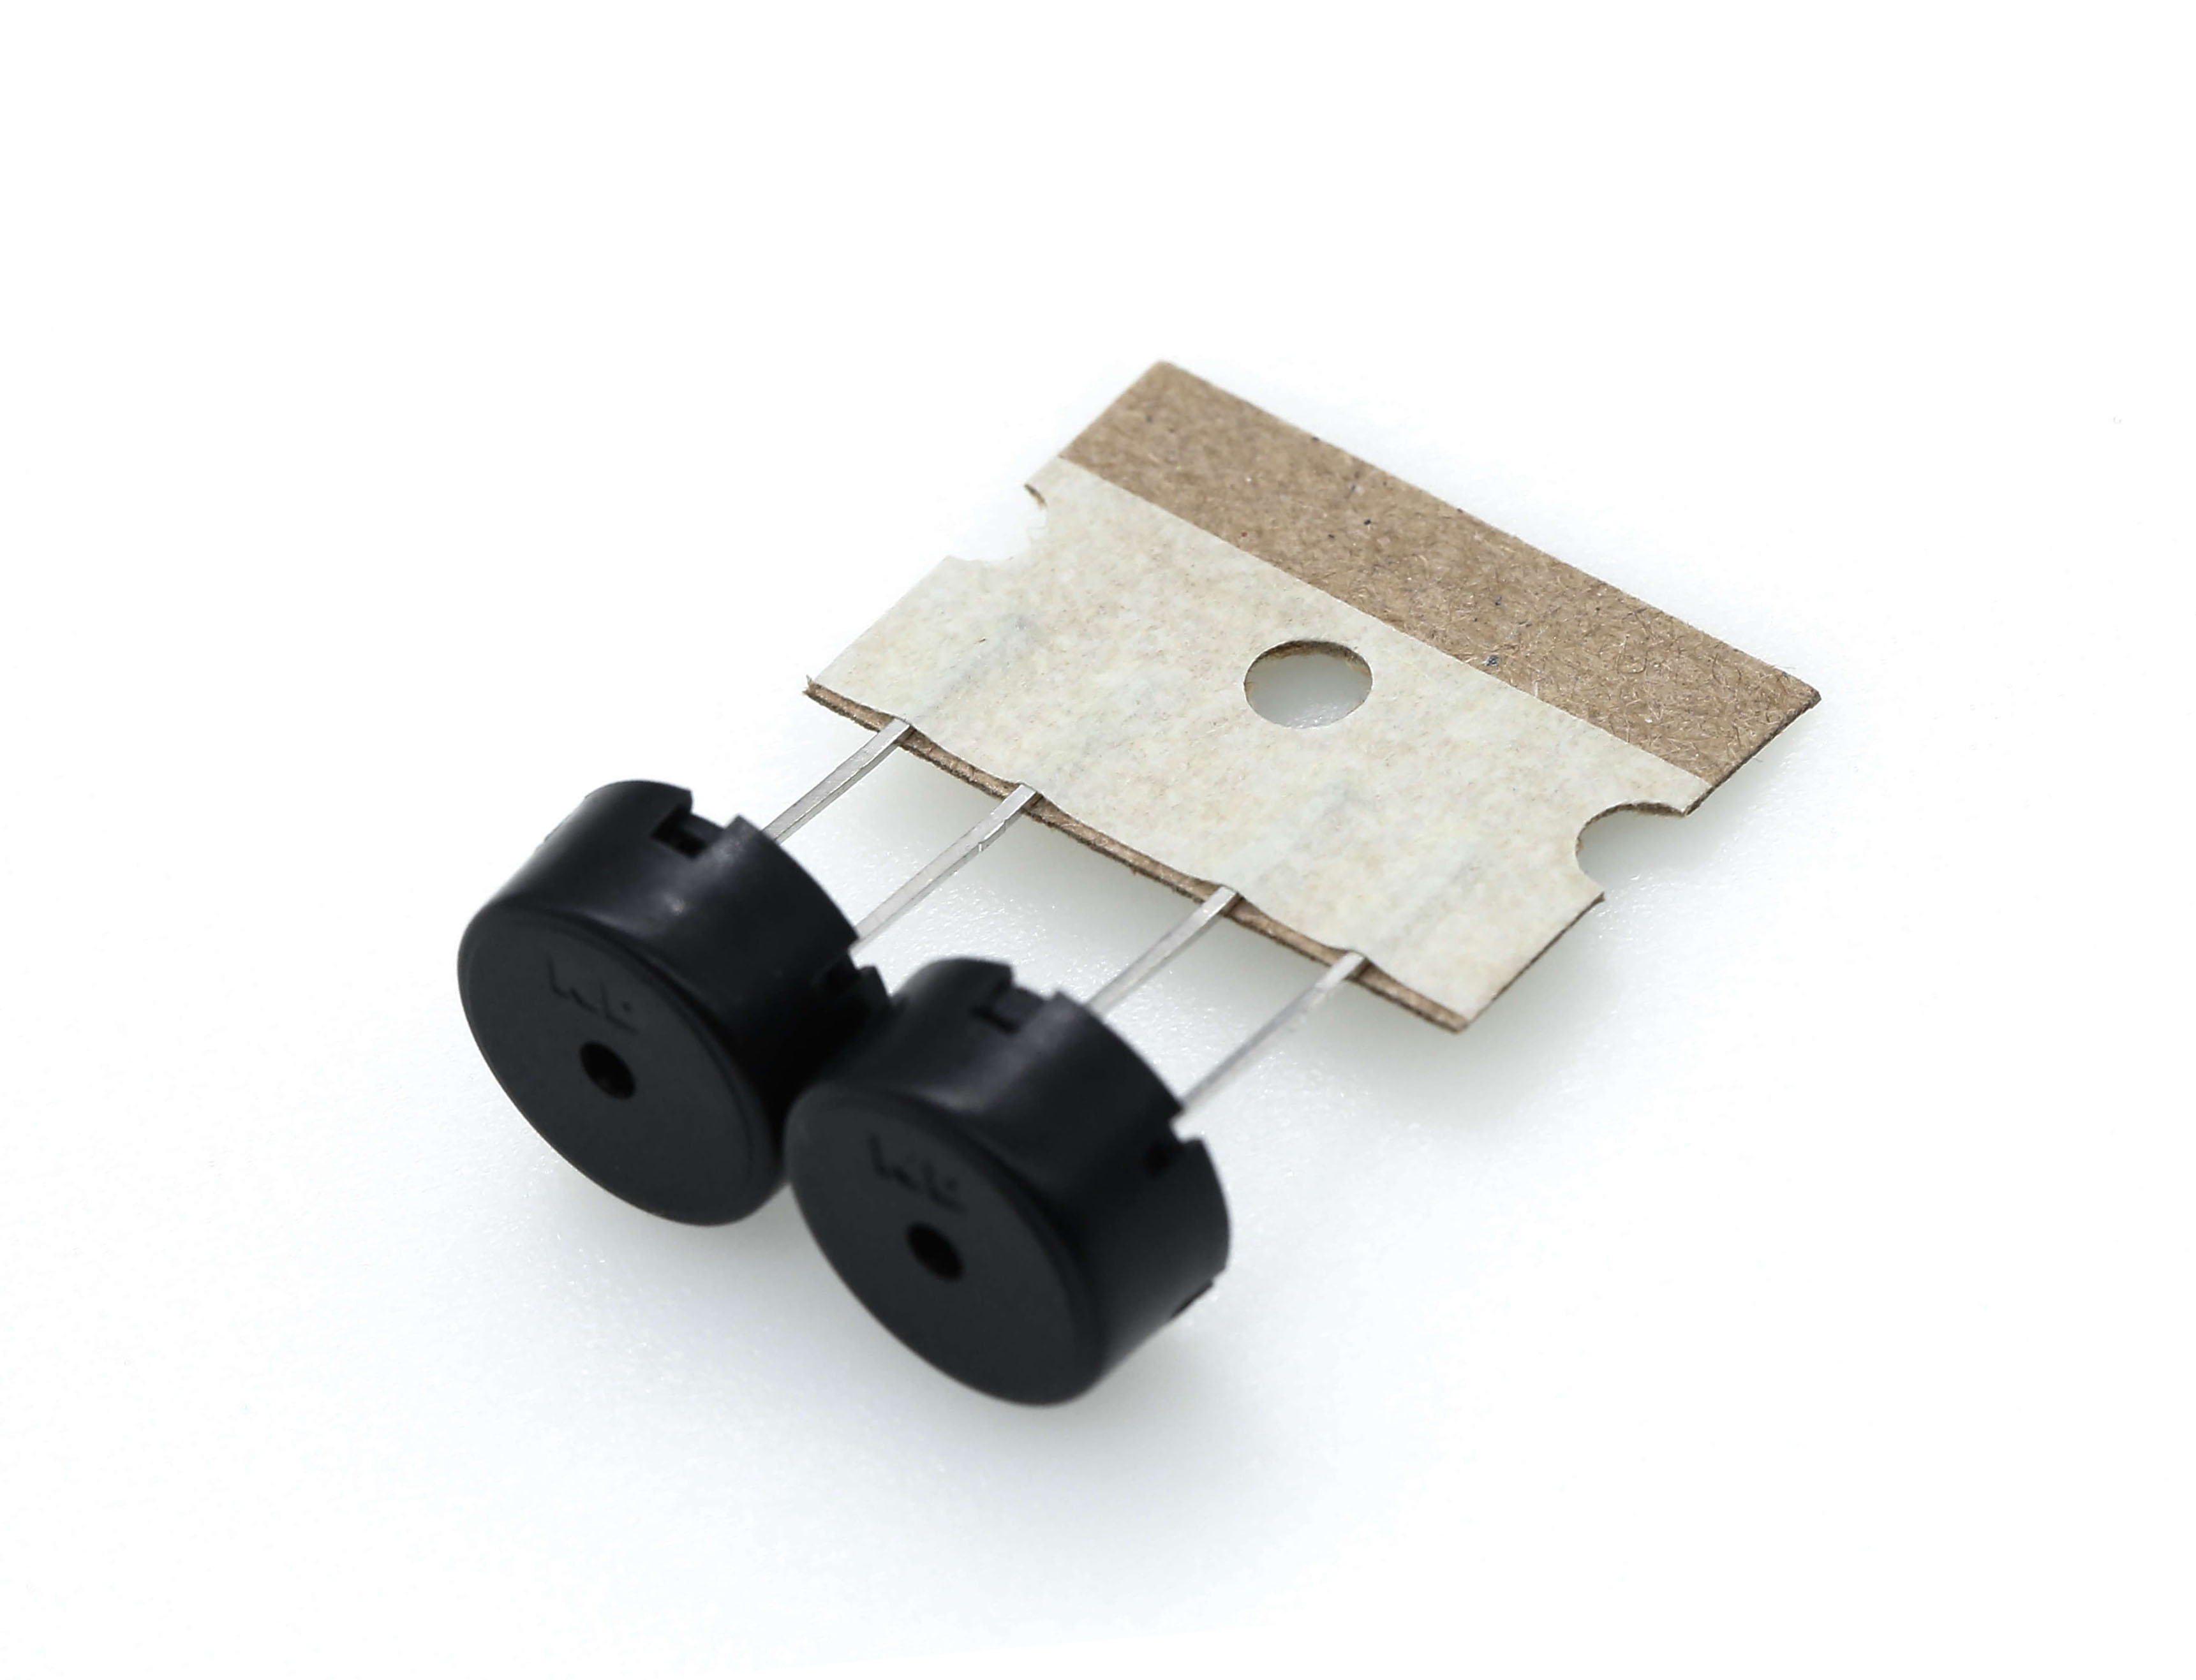 Fita adesiva tipo campainha piezoelétrico passiva de 13 mm para eletrodomésticos